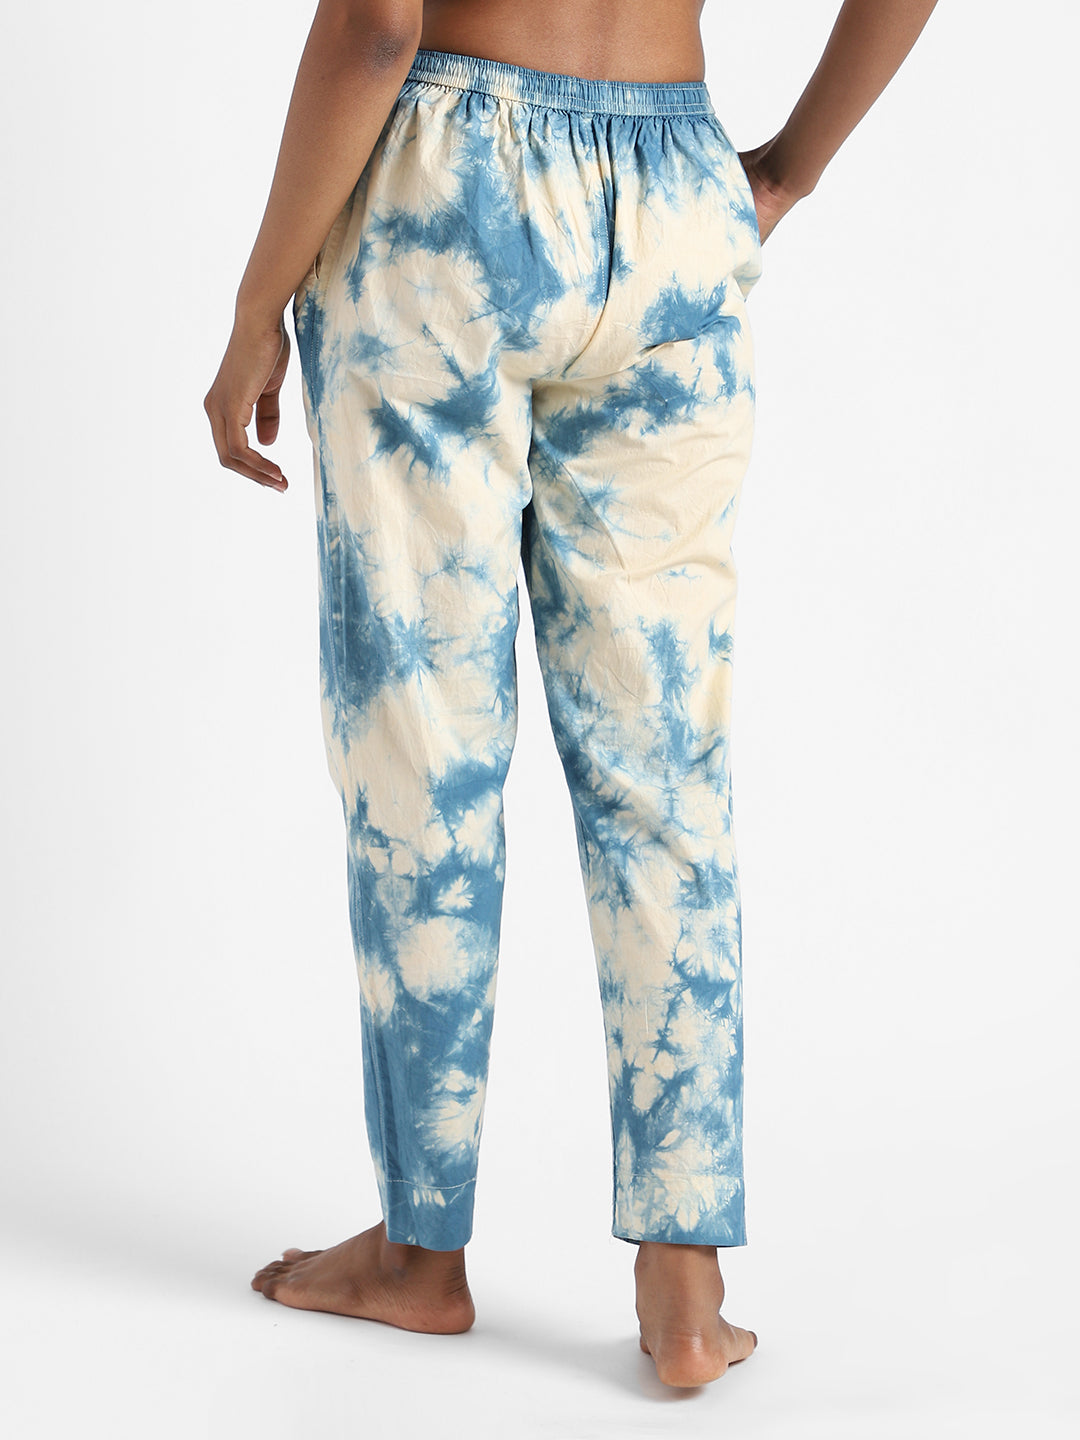 Indigo Blue Women's Organic Cotton & Natural Dyed Slim Fit Tie & Dye Pants